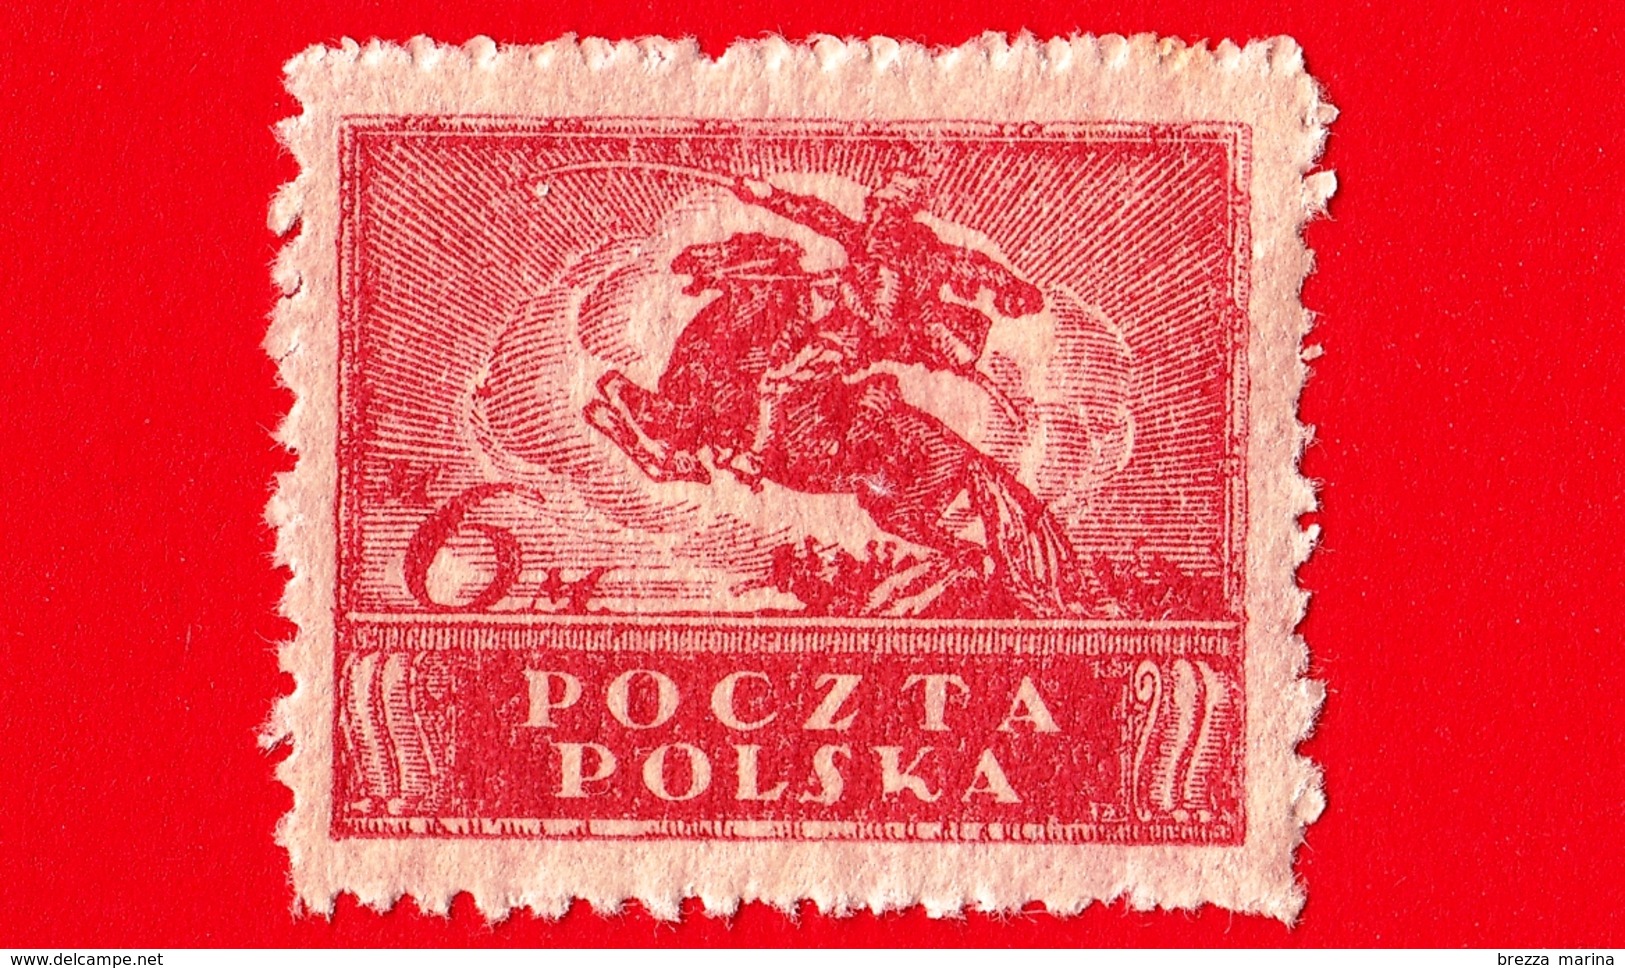 POLONIA - POLSKA - Nuovo - 1919 - Ulano Cavaliere Polacco - 6 M - Used Stamps